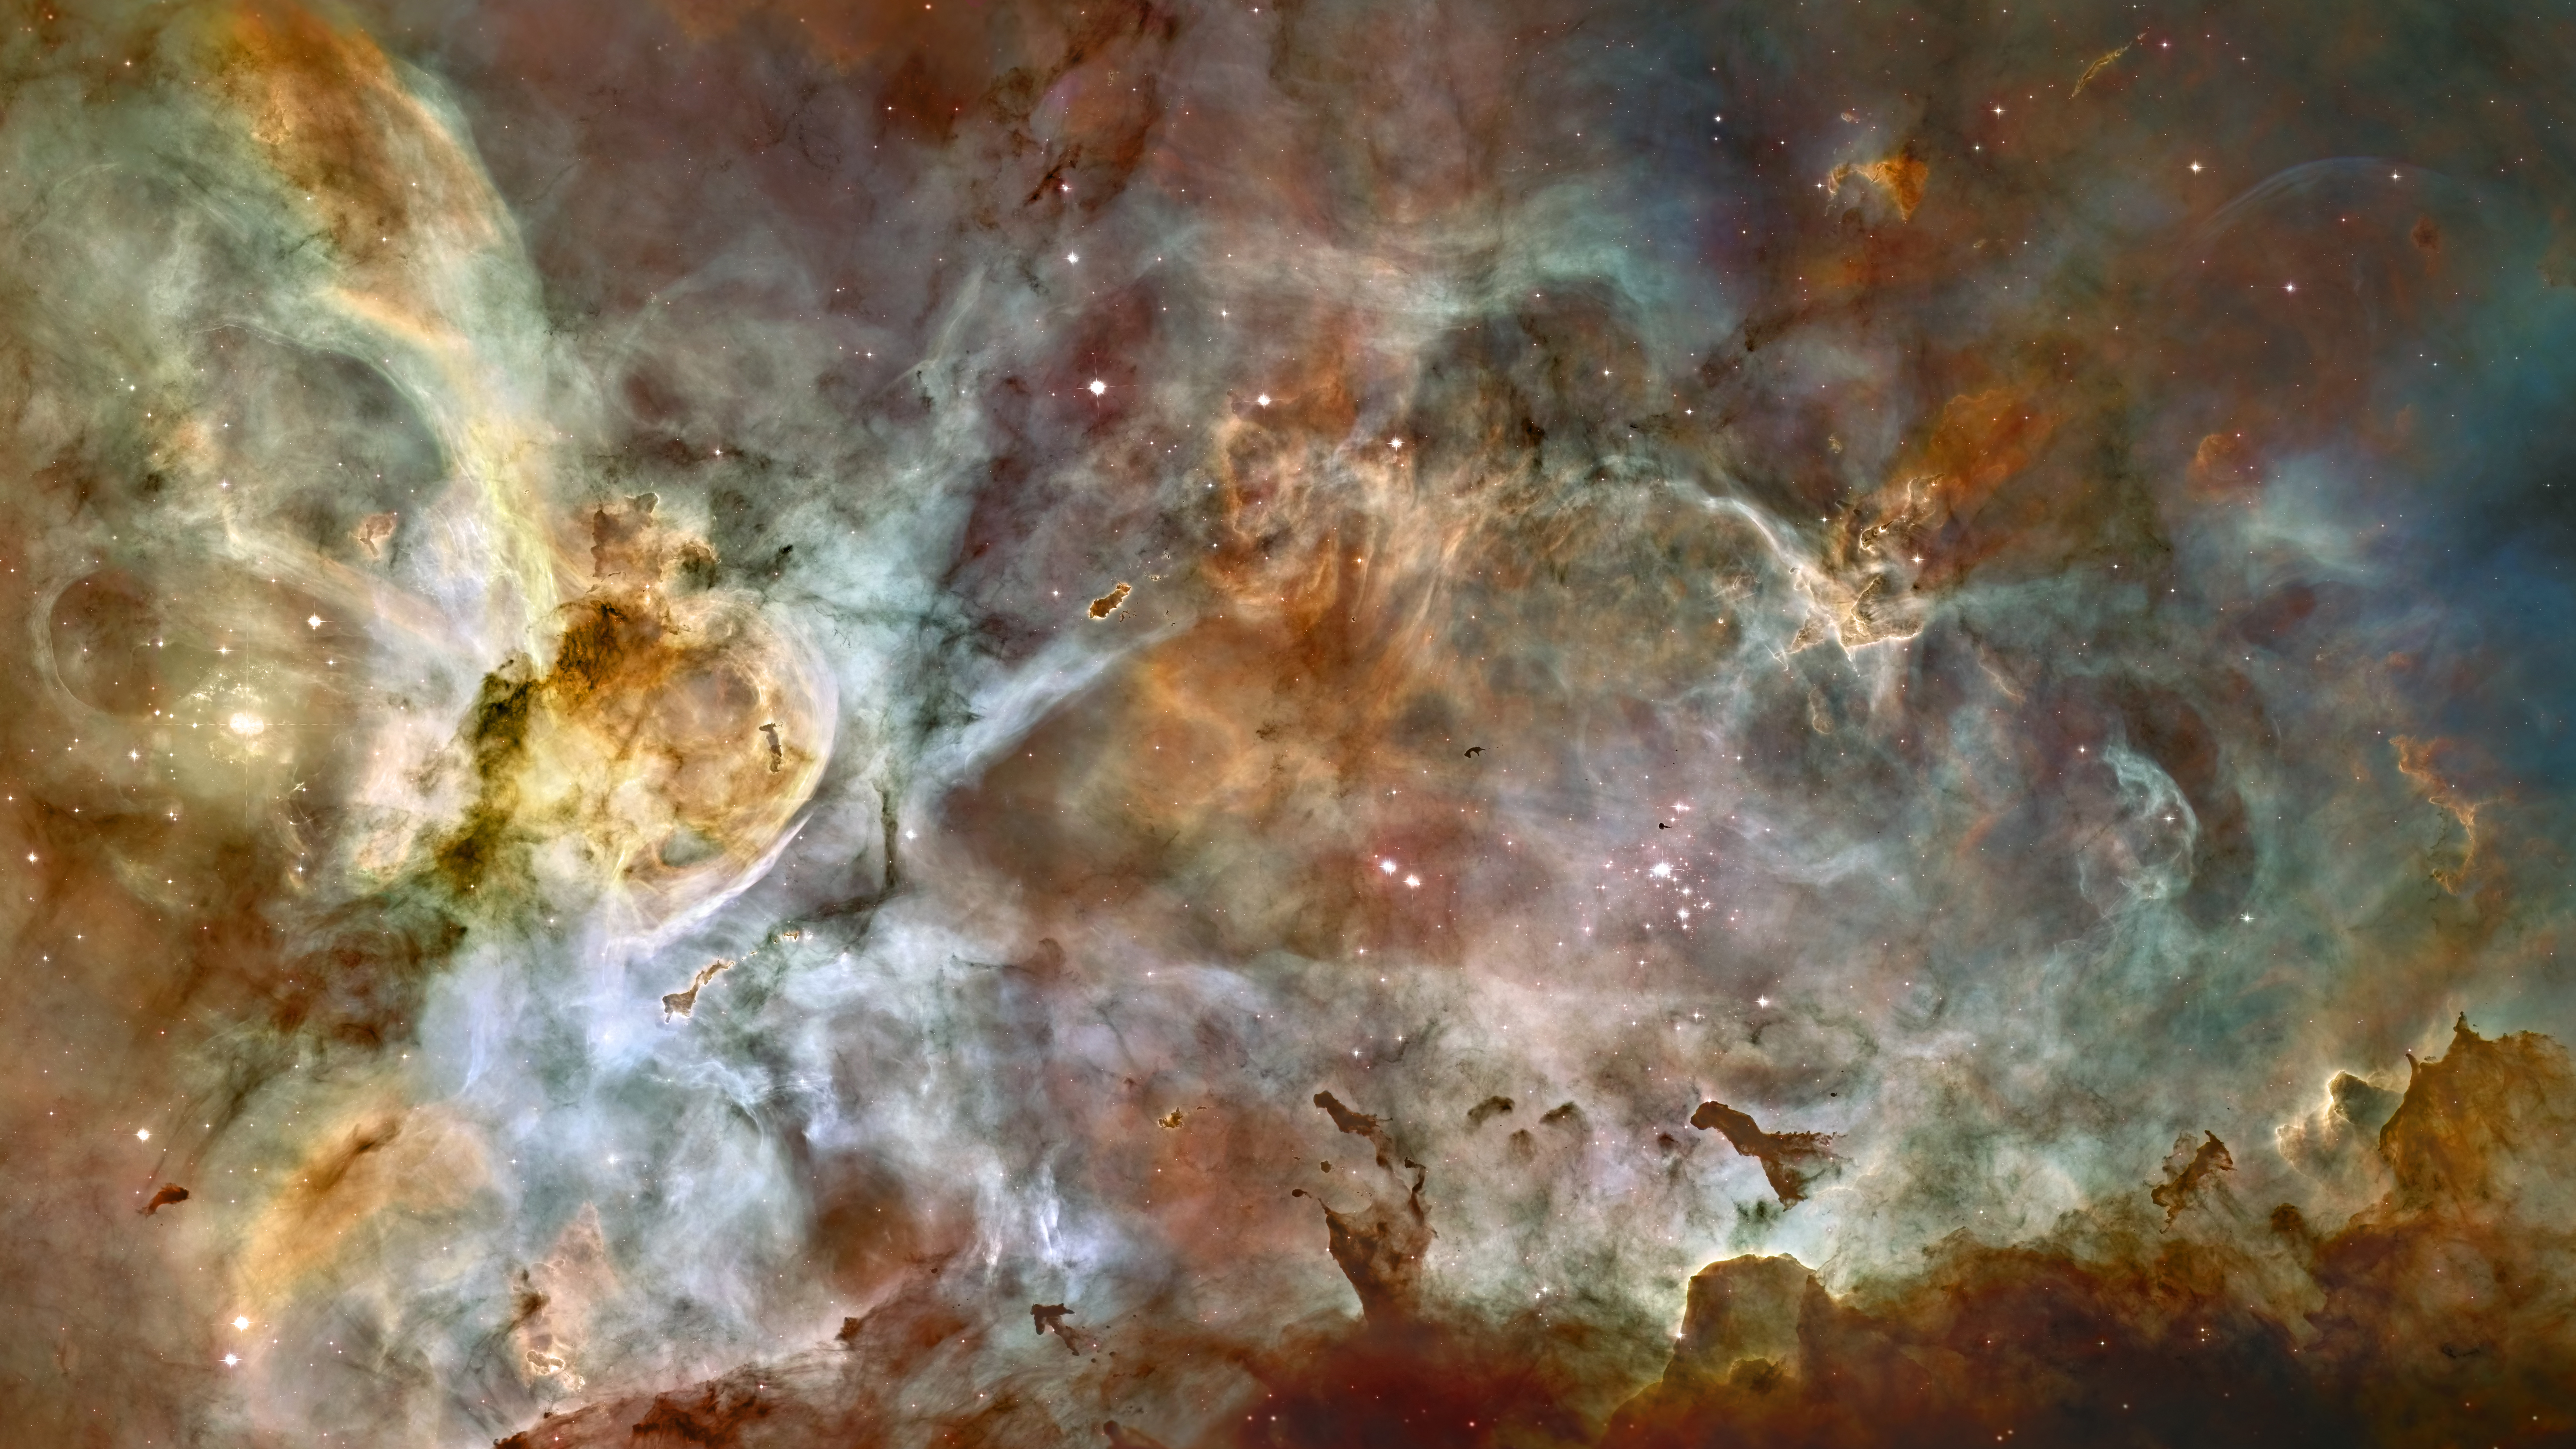 Carina Nebula Colorful Colors Nasa Nebula Sci Fi Space Star 5166x2906